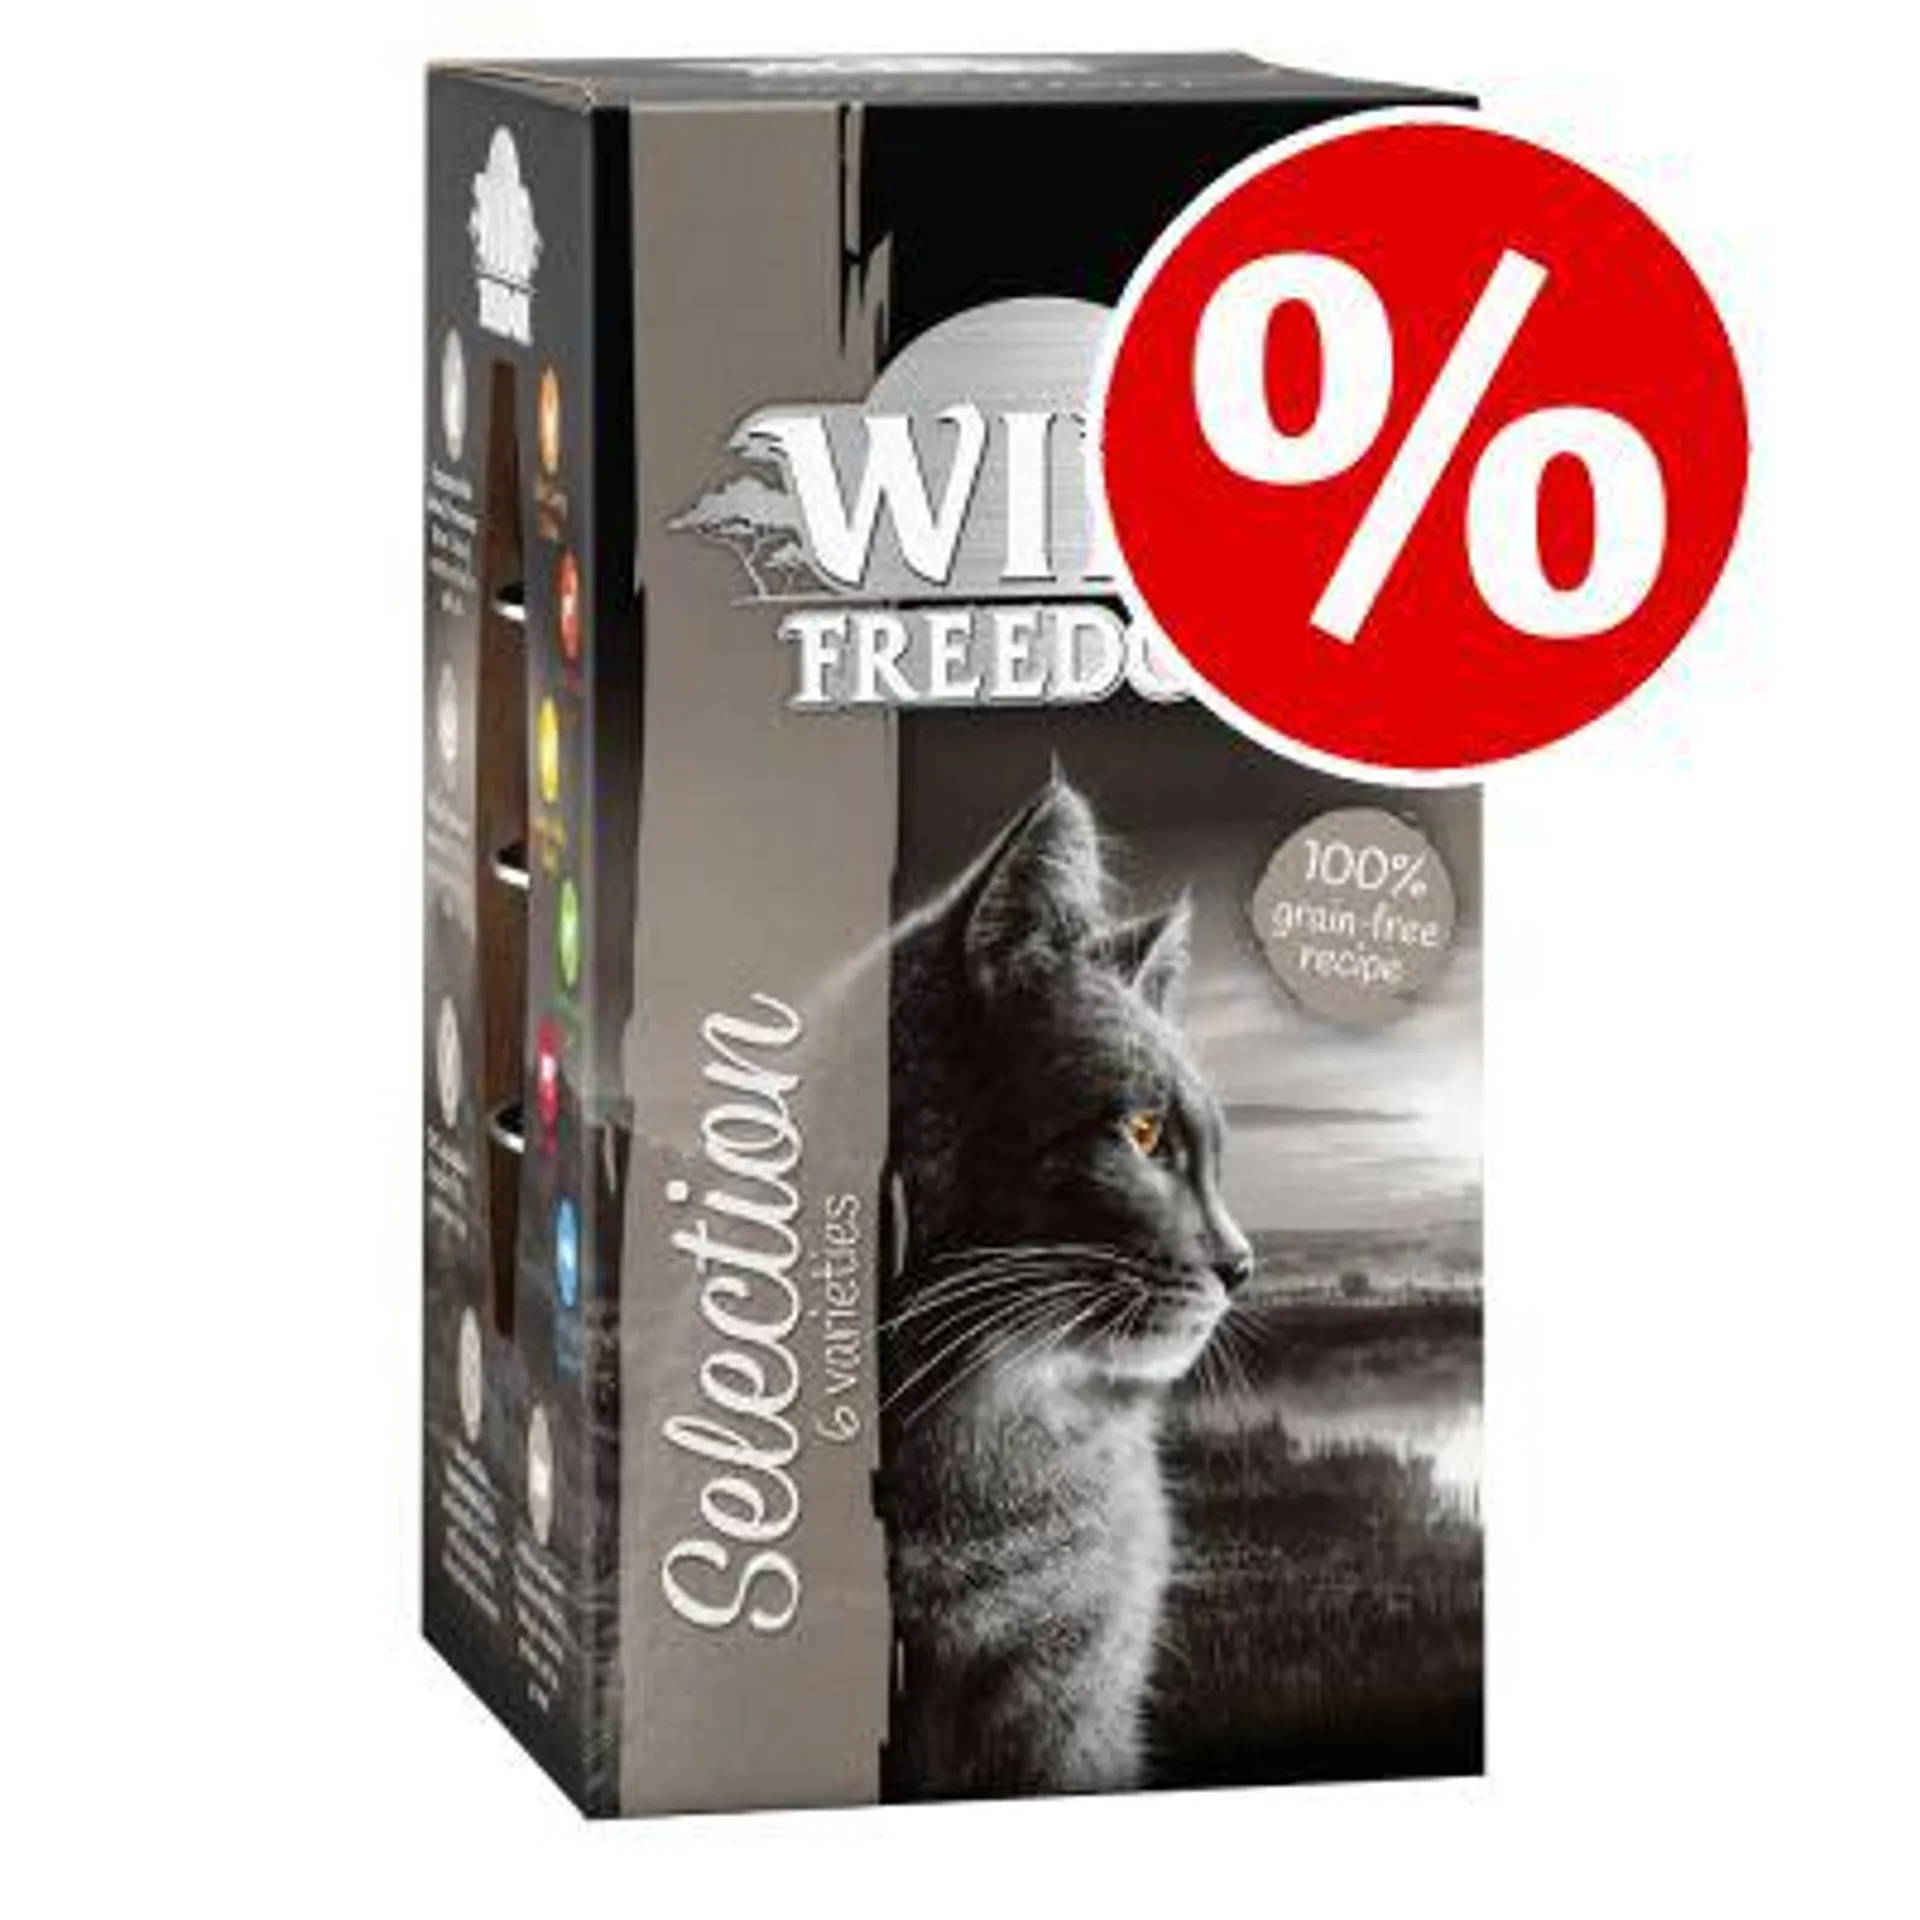 6 x 85g Wild Freedom Adult Trays Wet Cat Food - Special Price!*